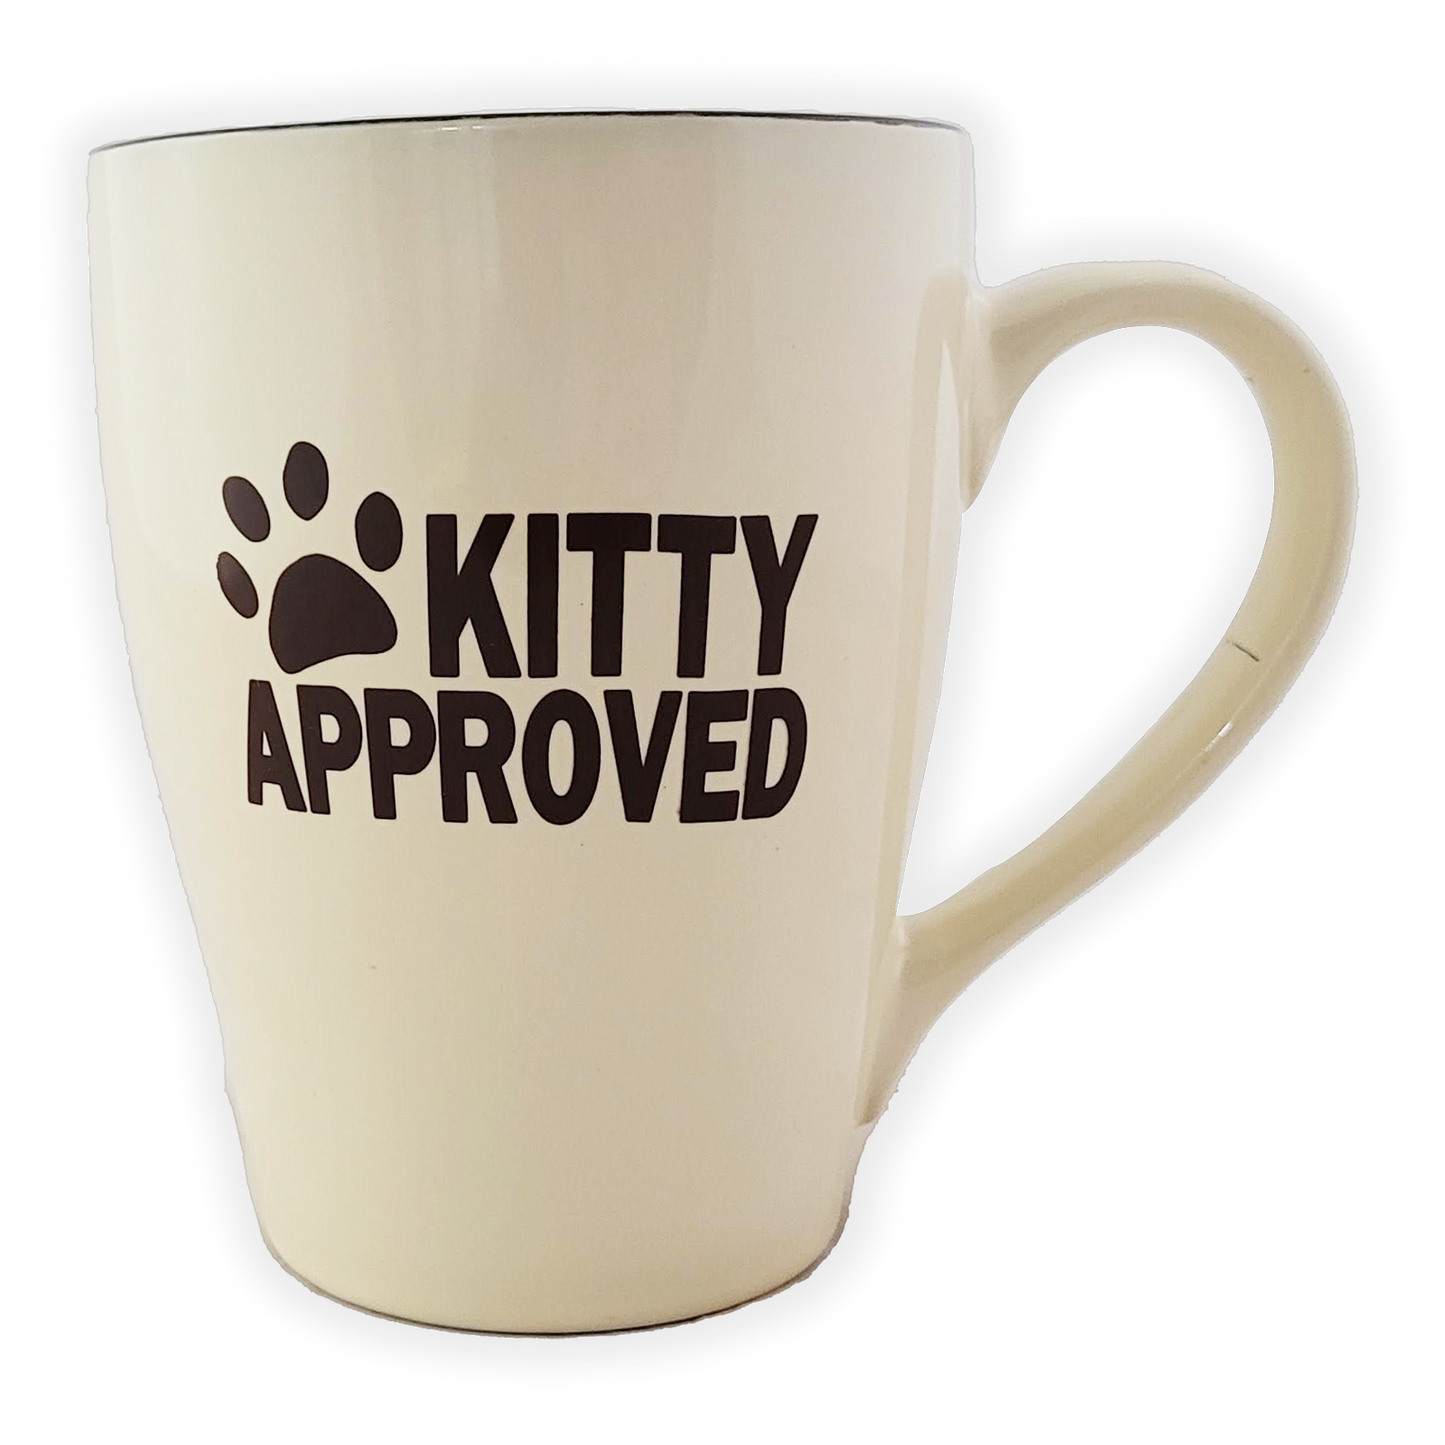 Kitty Approved Mug